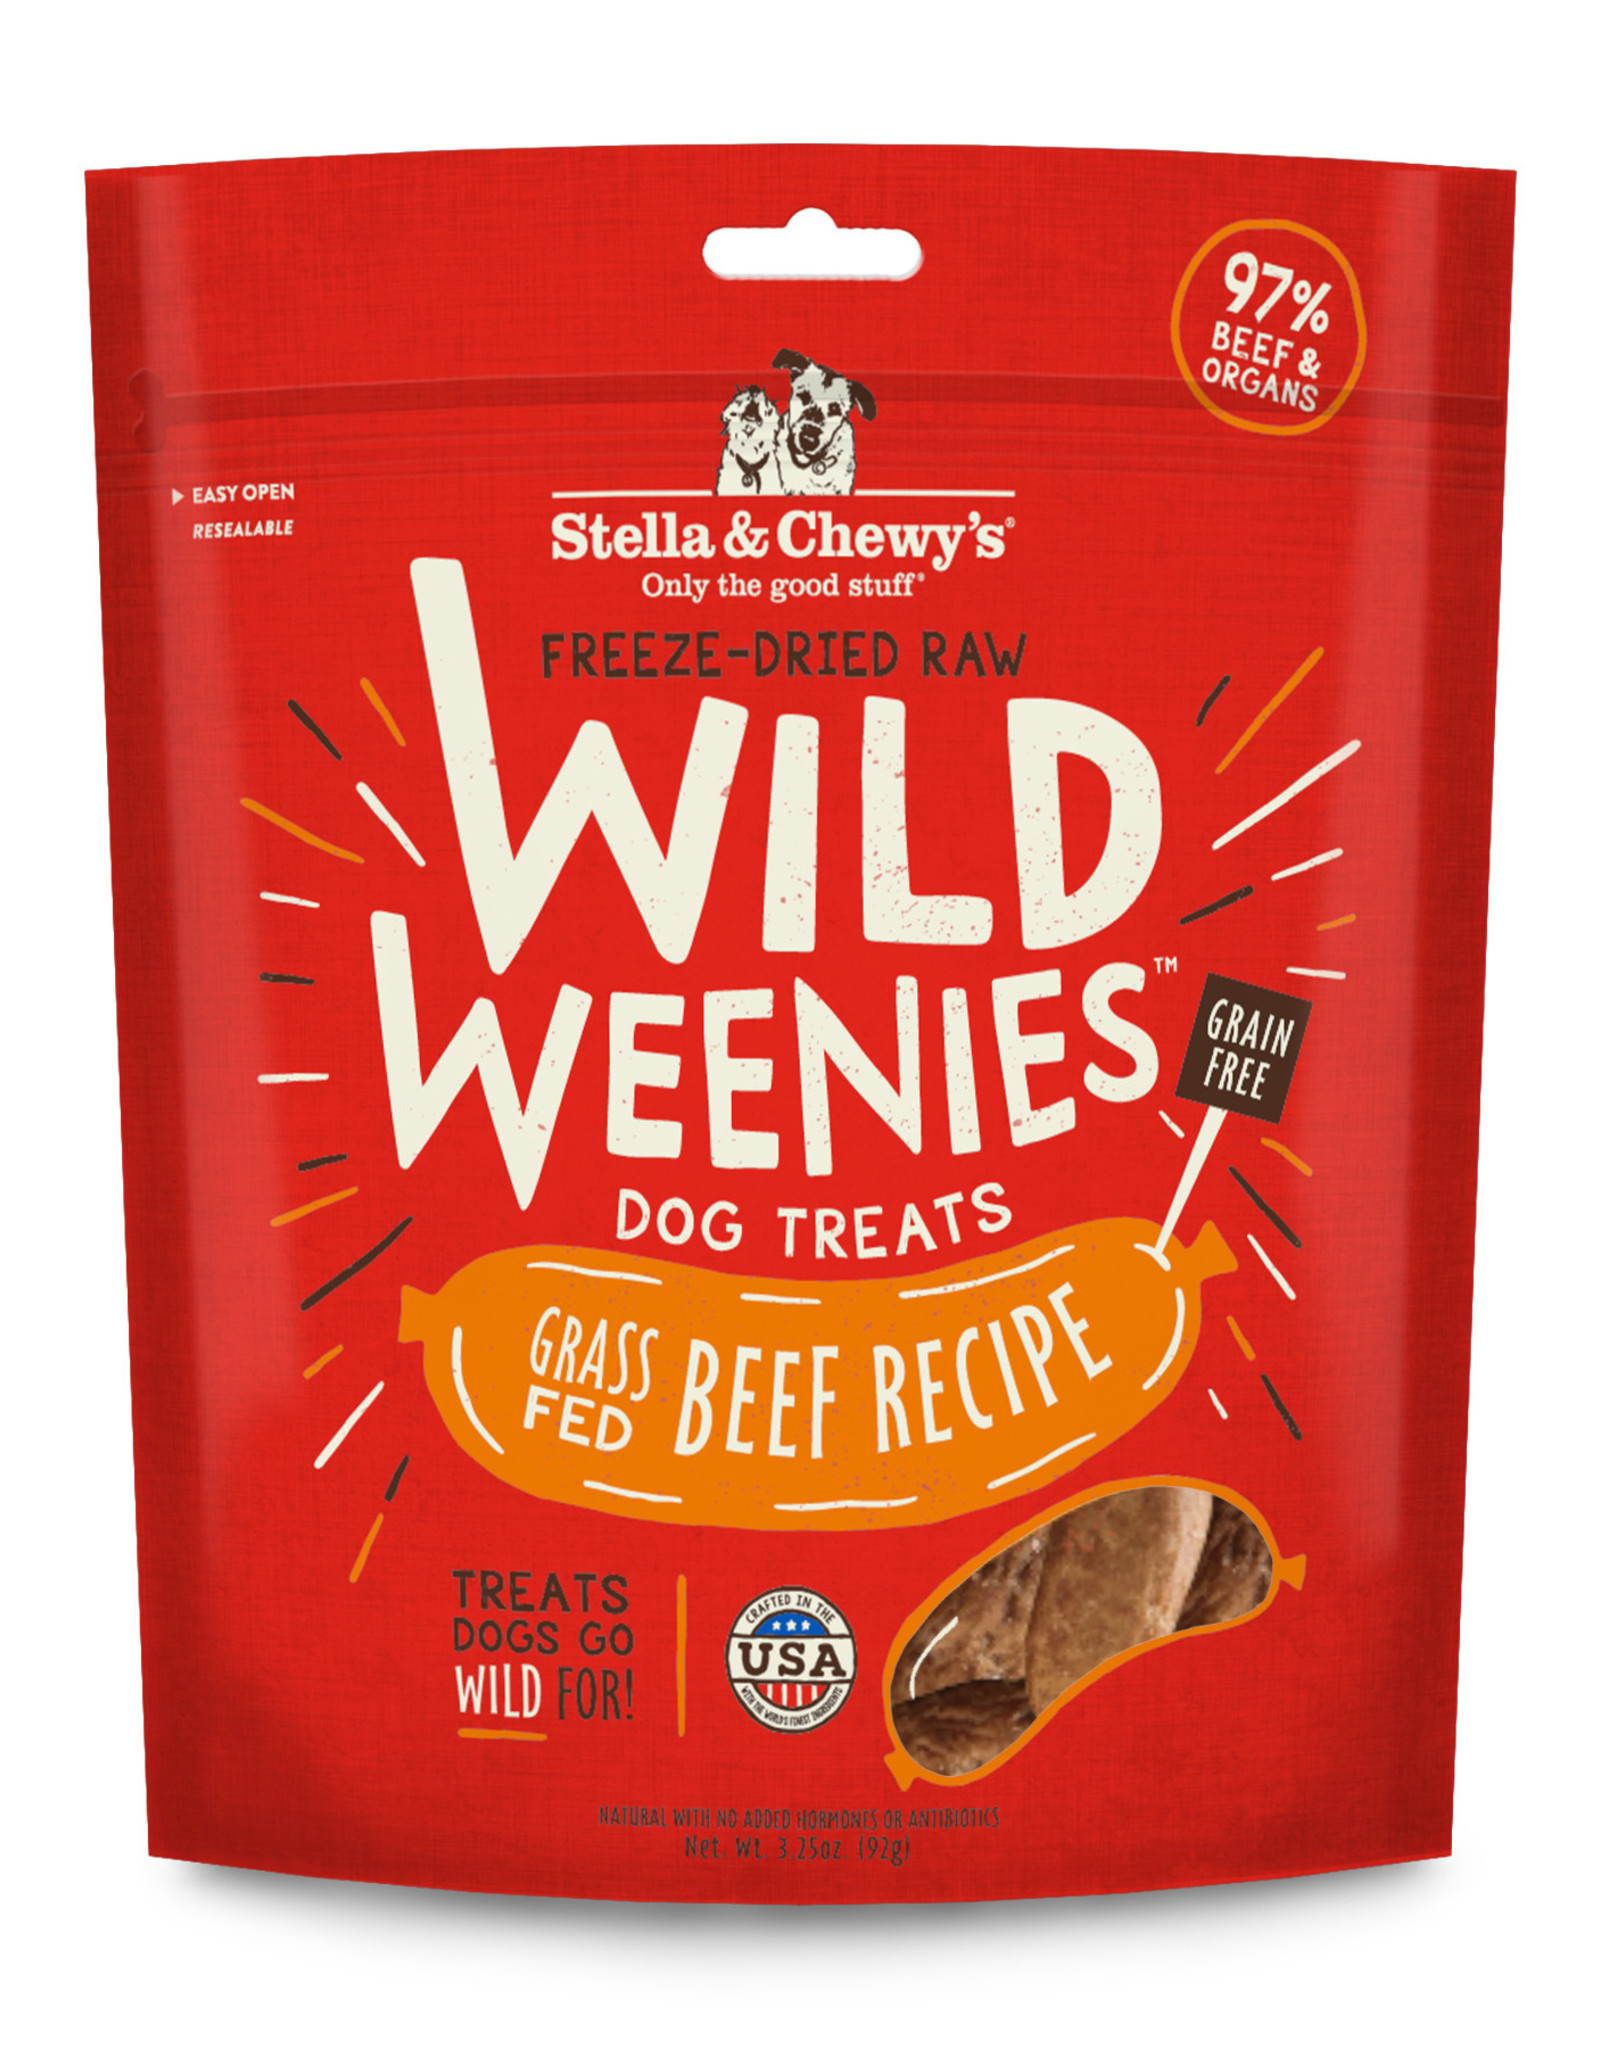 STELLA & CHEWY'S Stella & Chewy's Grass-Fed Beef Wild Weenies 3.25 oz